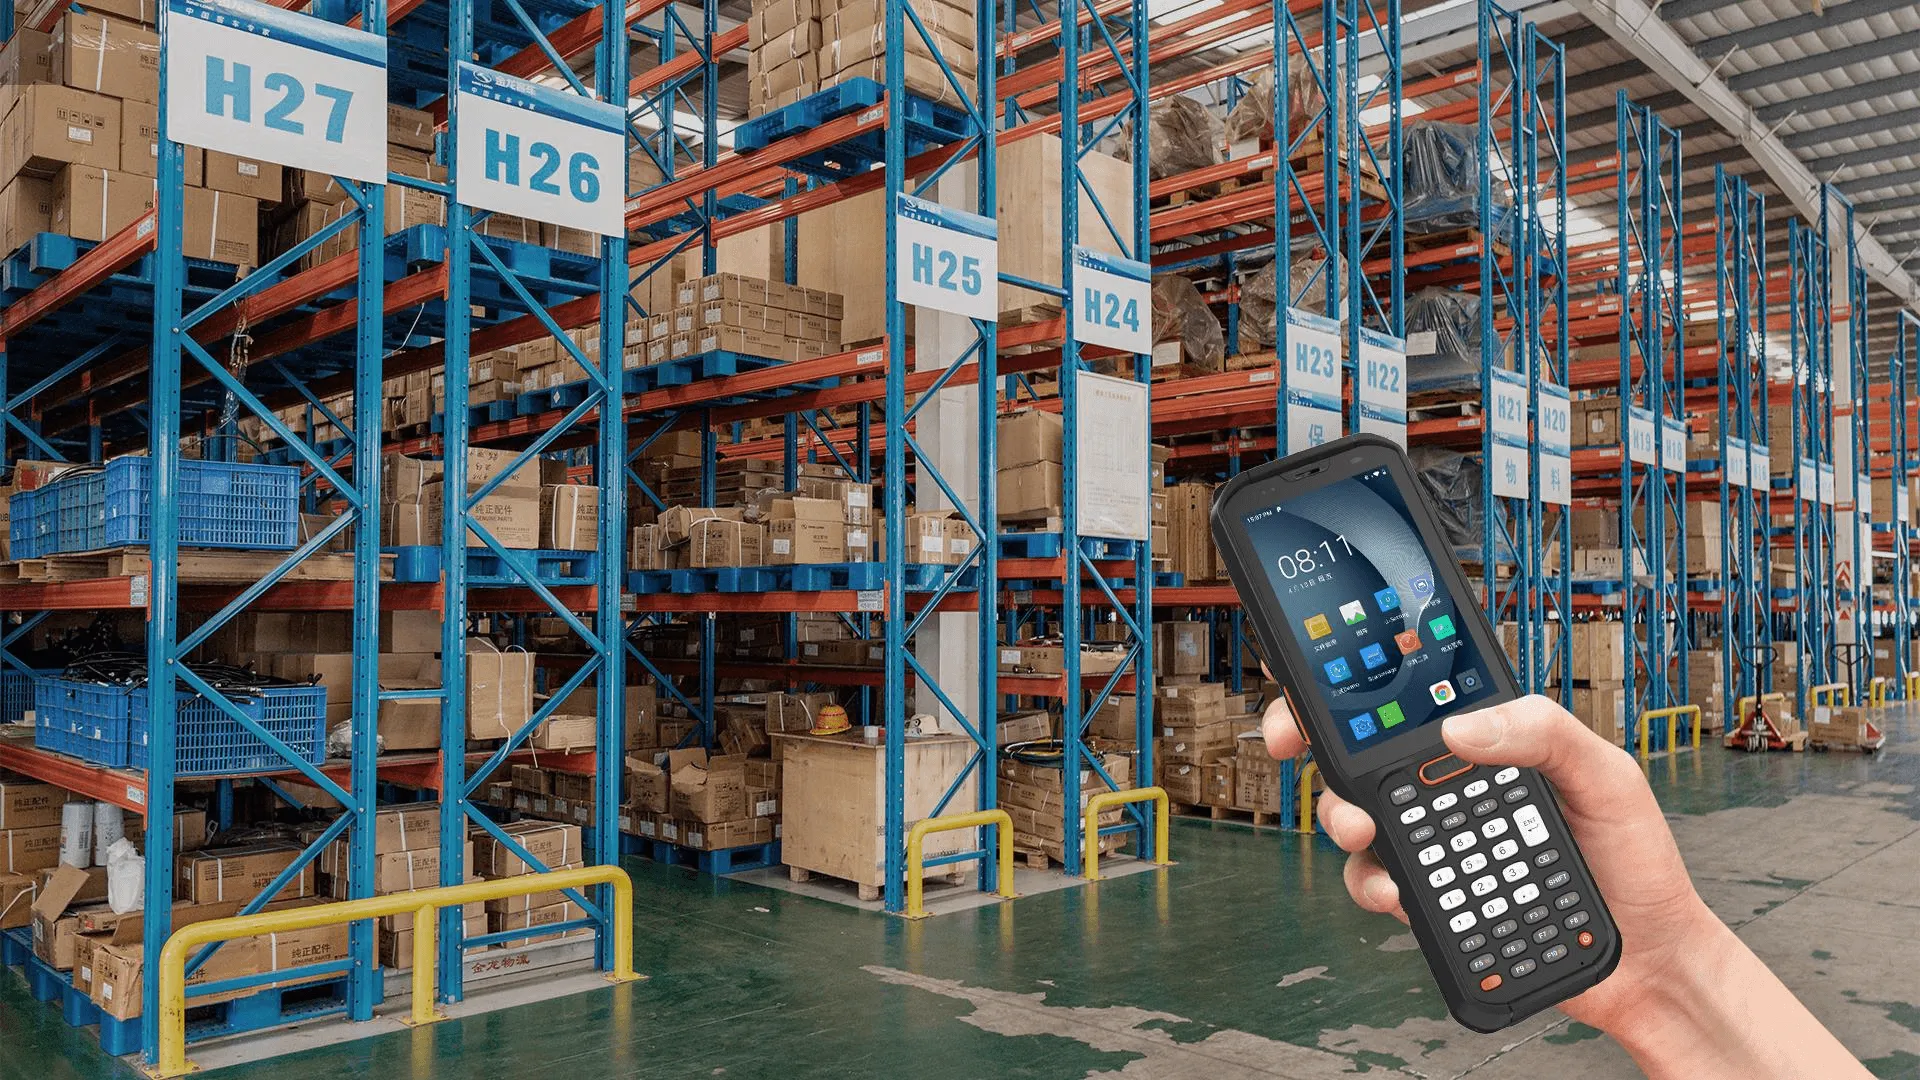 Warehouse Digitalization: How to Digitize Your Warehouse for Maximum Productivity